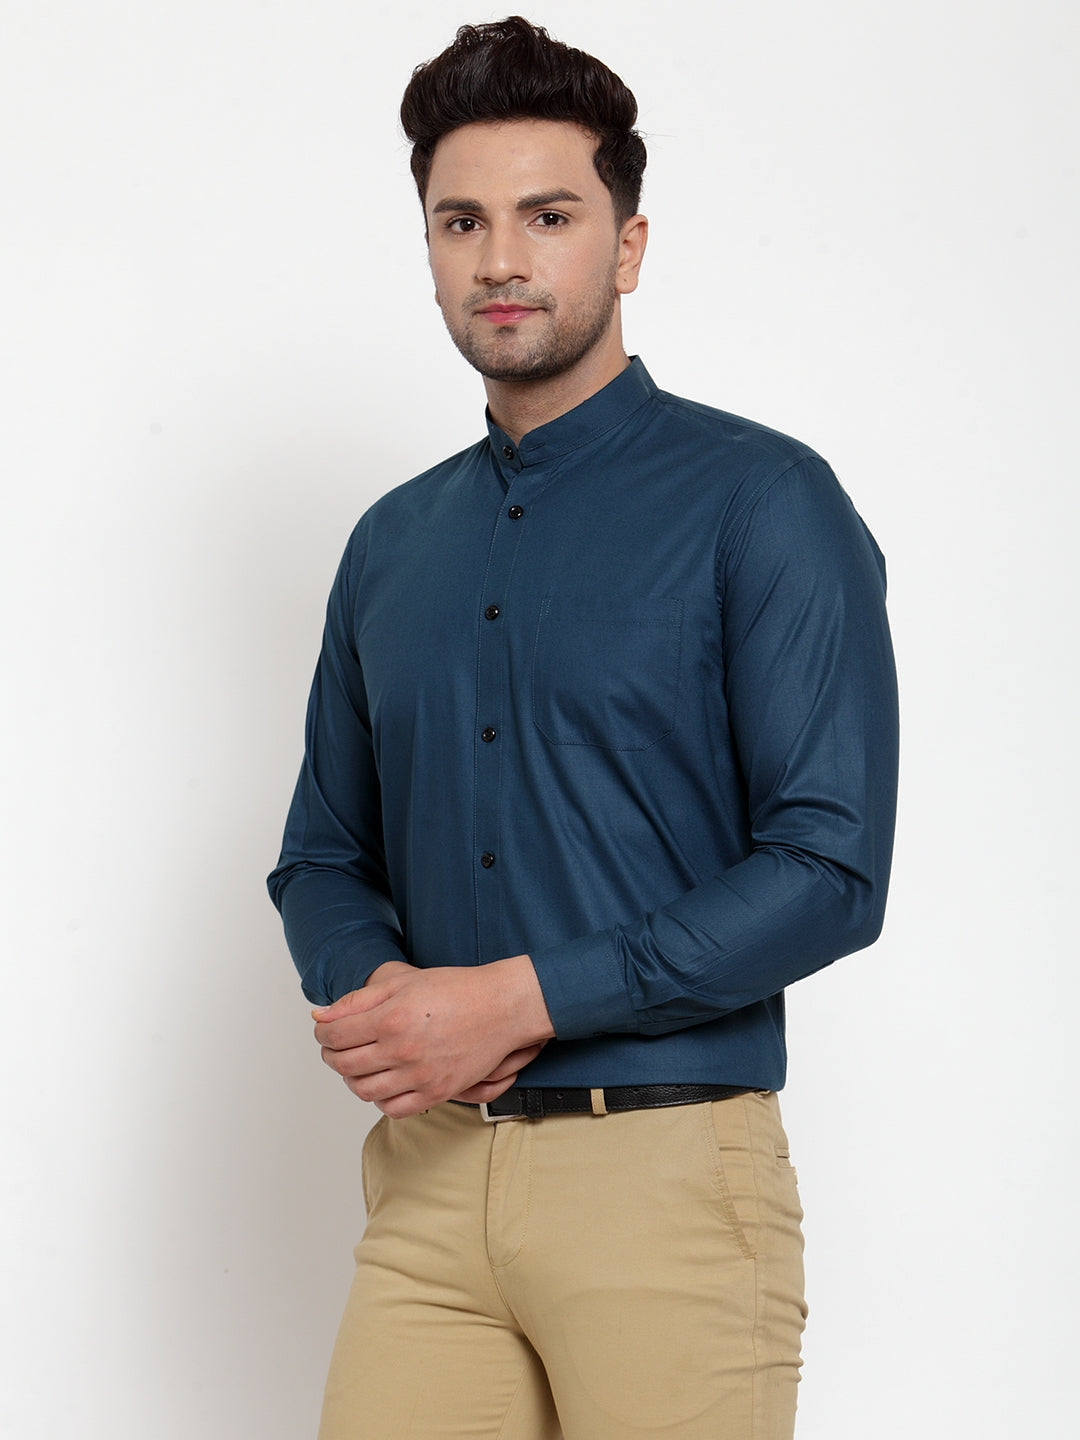 Men's Navy Cotton Solid Mandarin Collar Formal Shirts ( SF 726Teal ) - Jainish